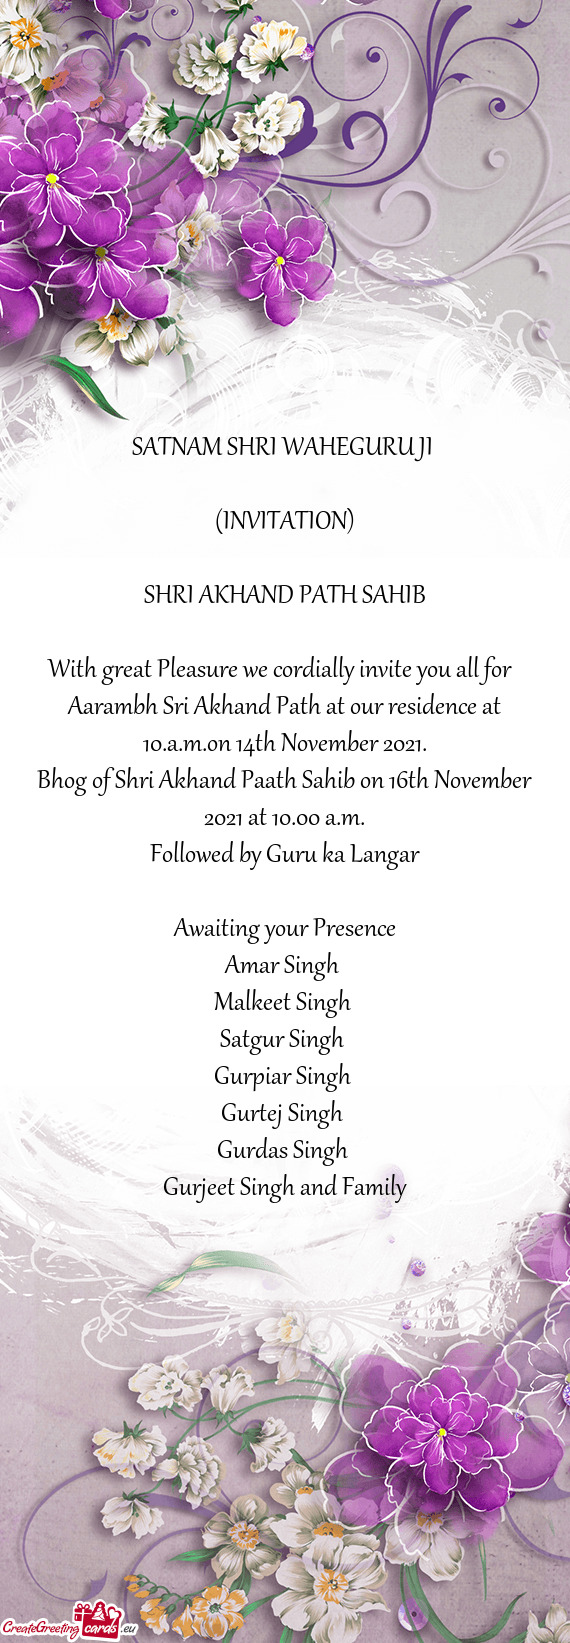 Aarambh Sri Akhand Path at our residence at 10.a.m.on 14th November 2021